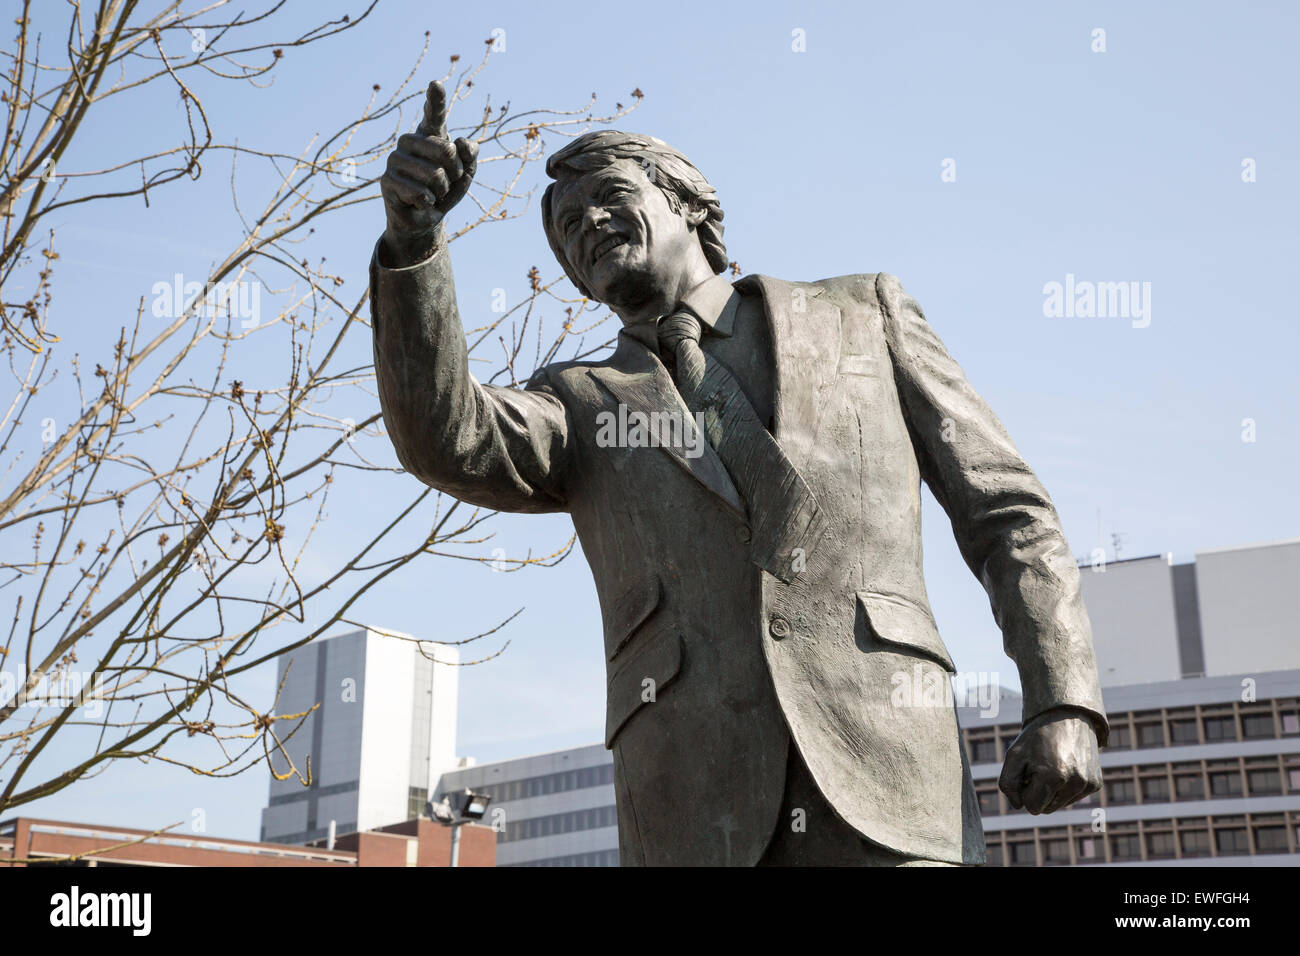 Statue de Sir Bobby Robson l'ancien gestionnaire de football Angleterre, Ipswich, Suffolk, Angleterre, RU Banque D'Images